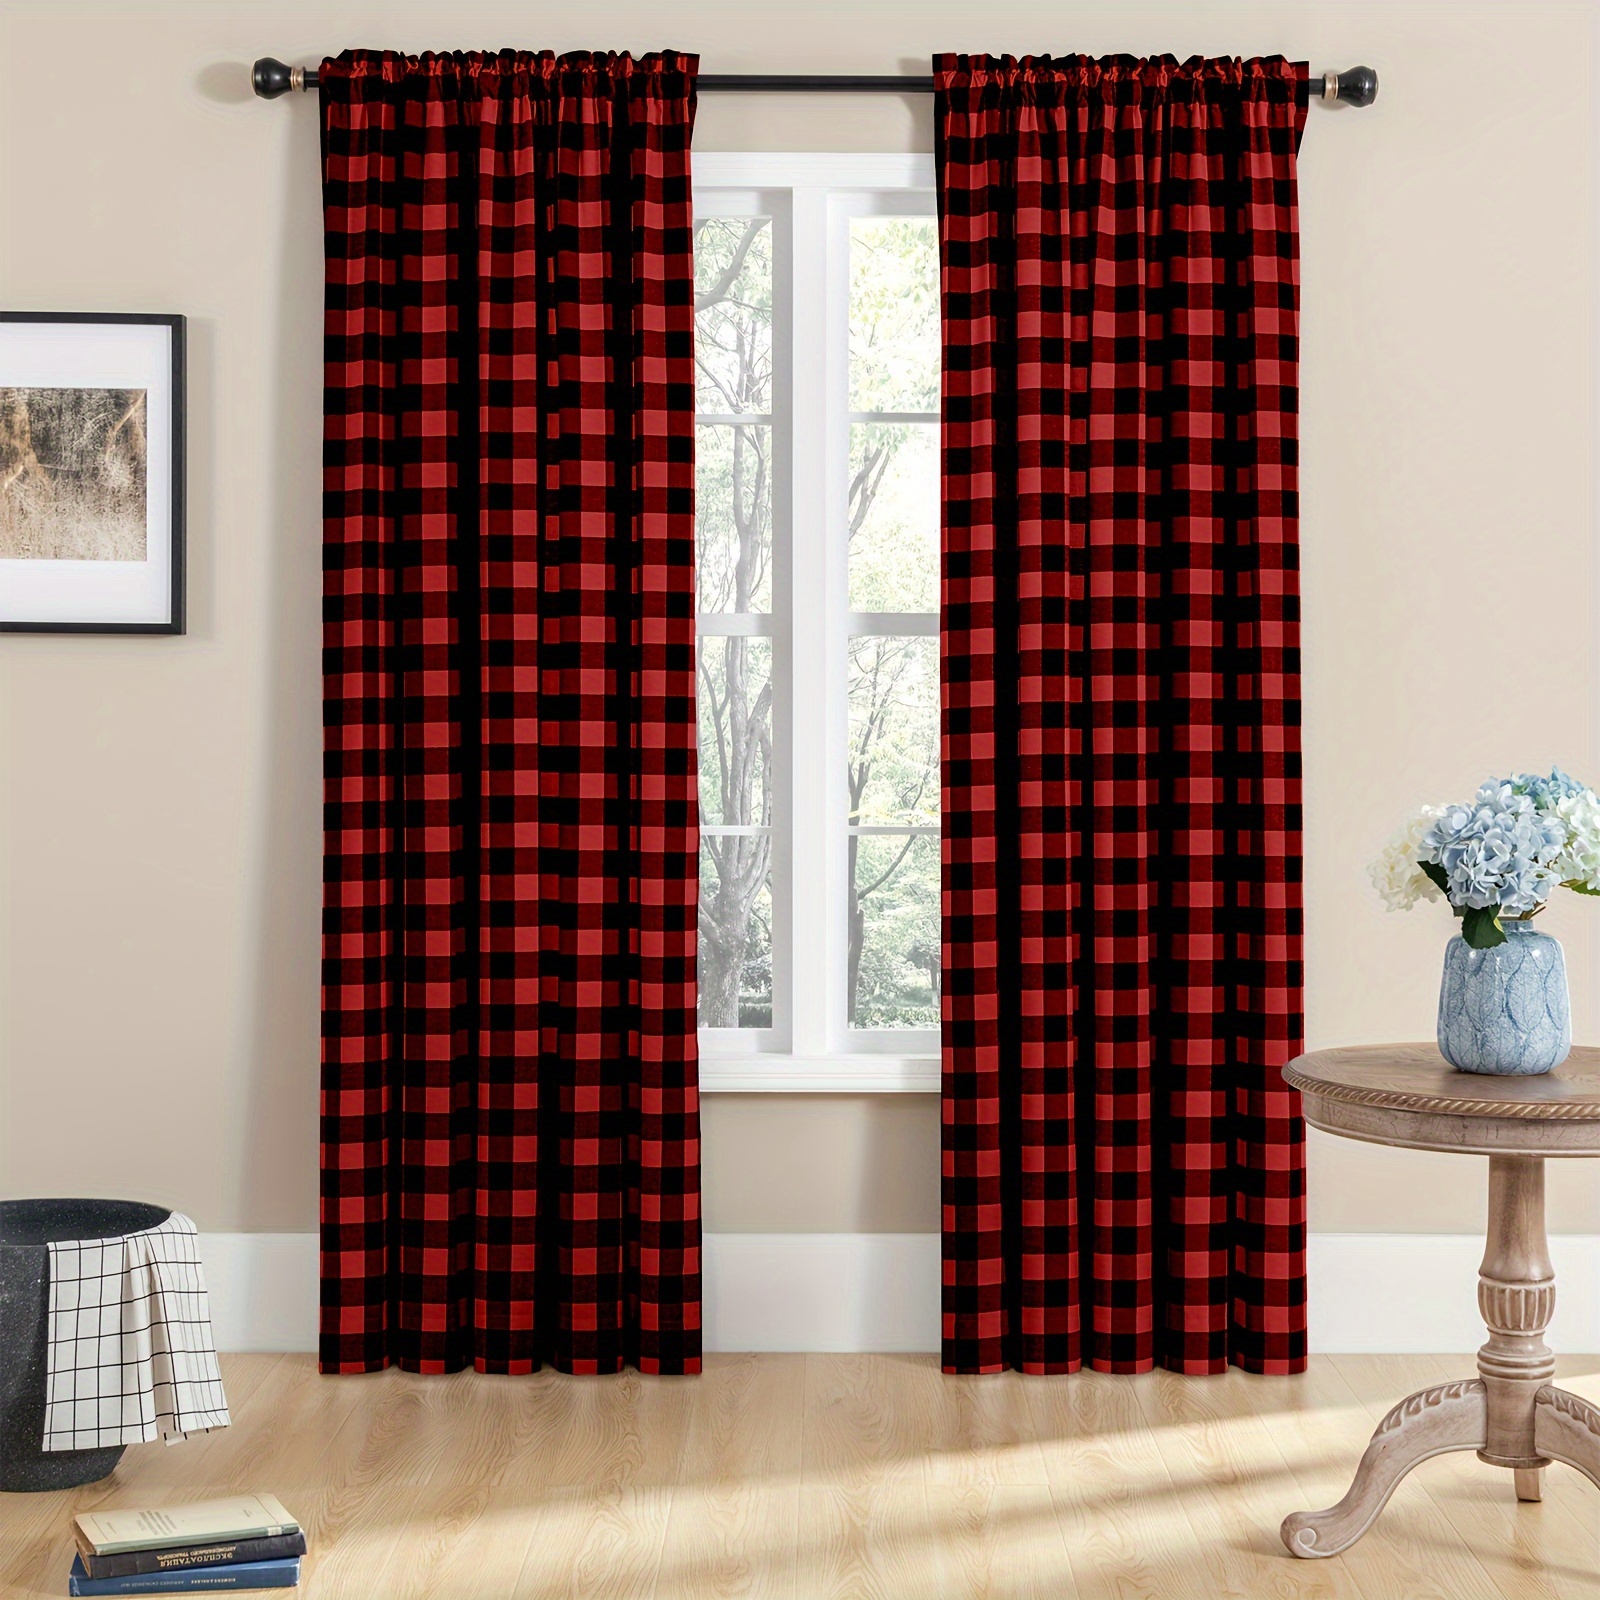 

2 Panels Buffalo Check Plaid Curtains For Living Room, Bedroom Farmhouse Gingham Style Cotton Texture Rod Pocket Semi Curtain Drapes